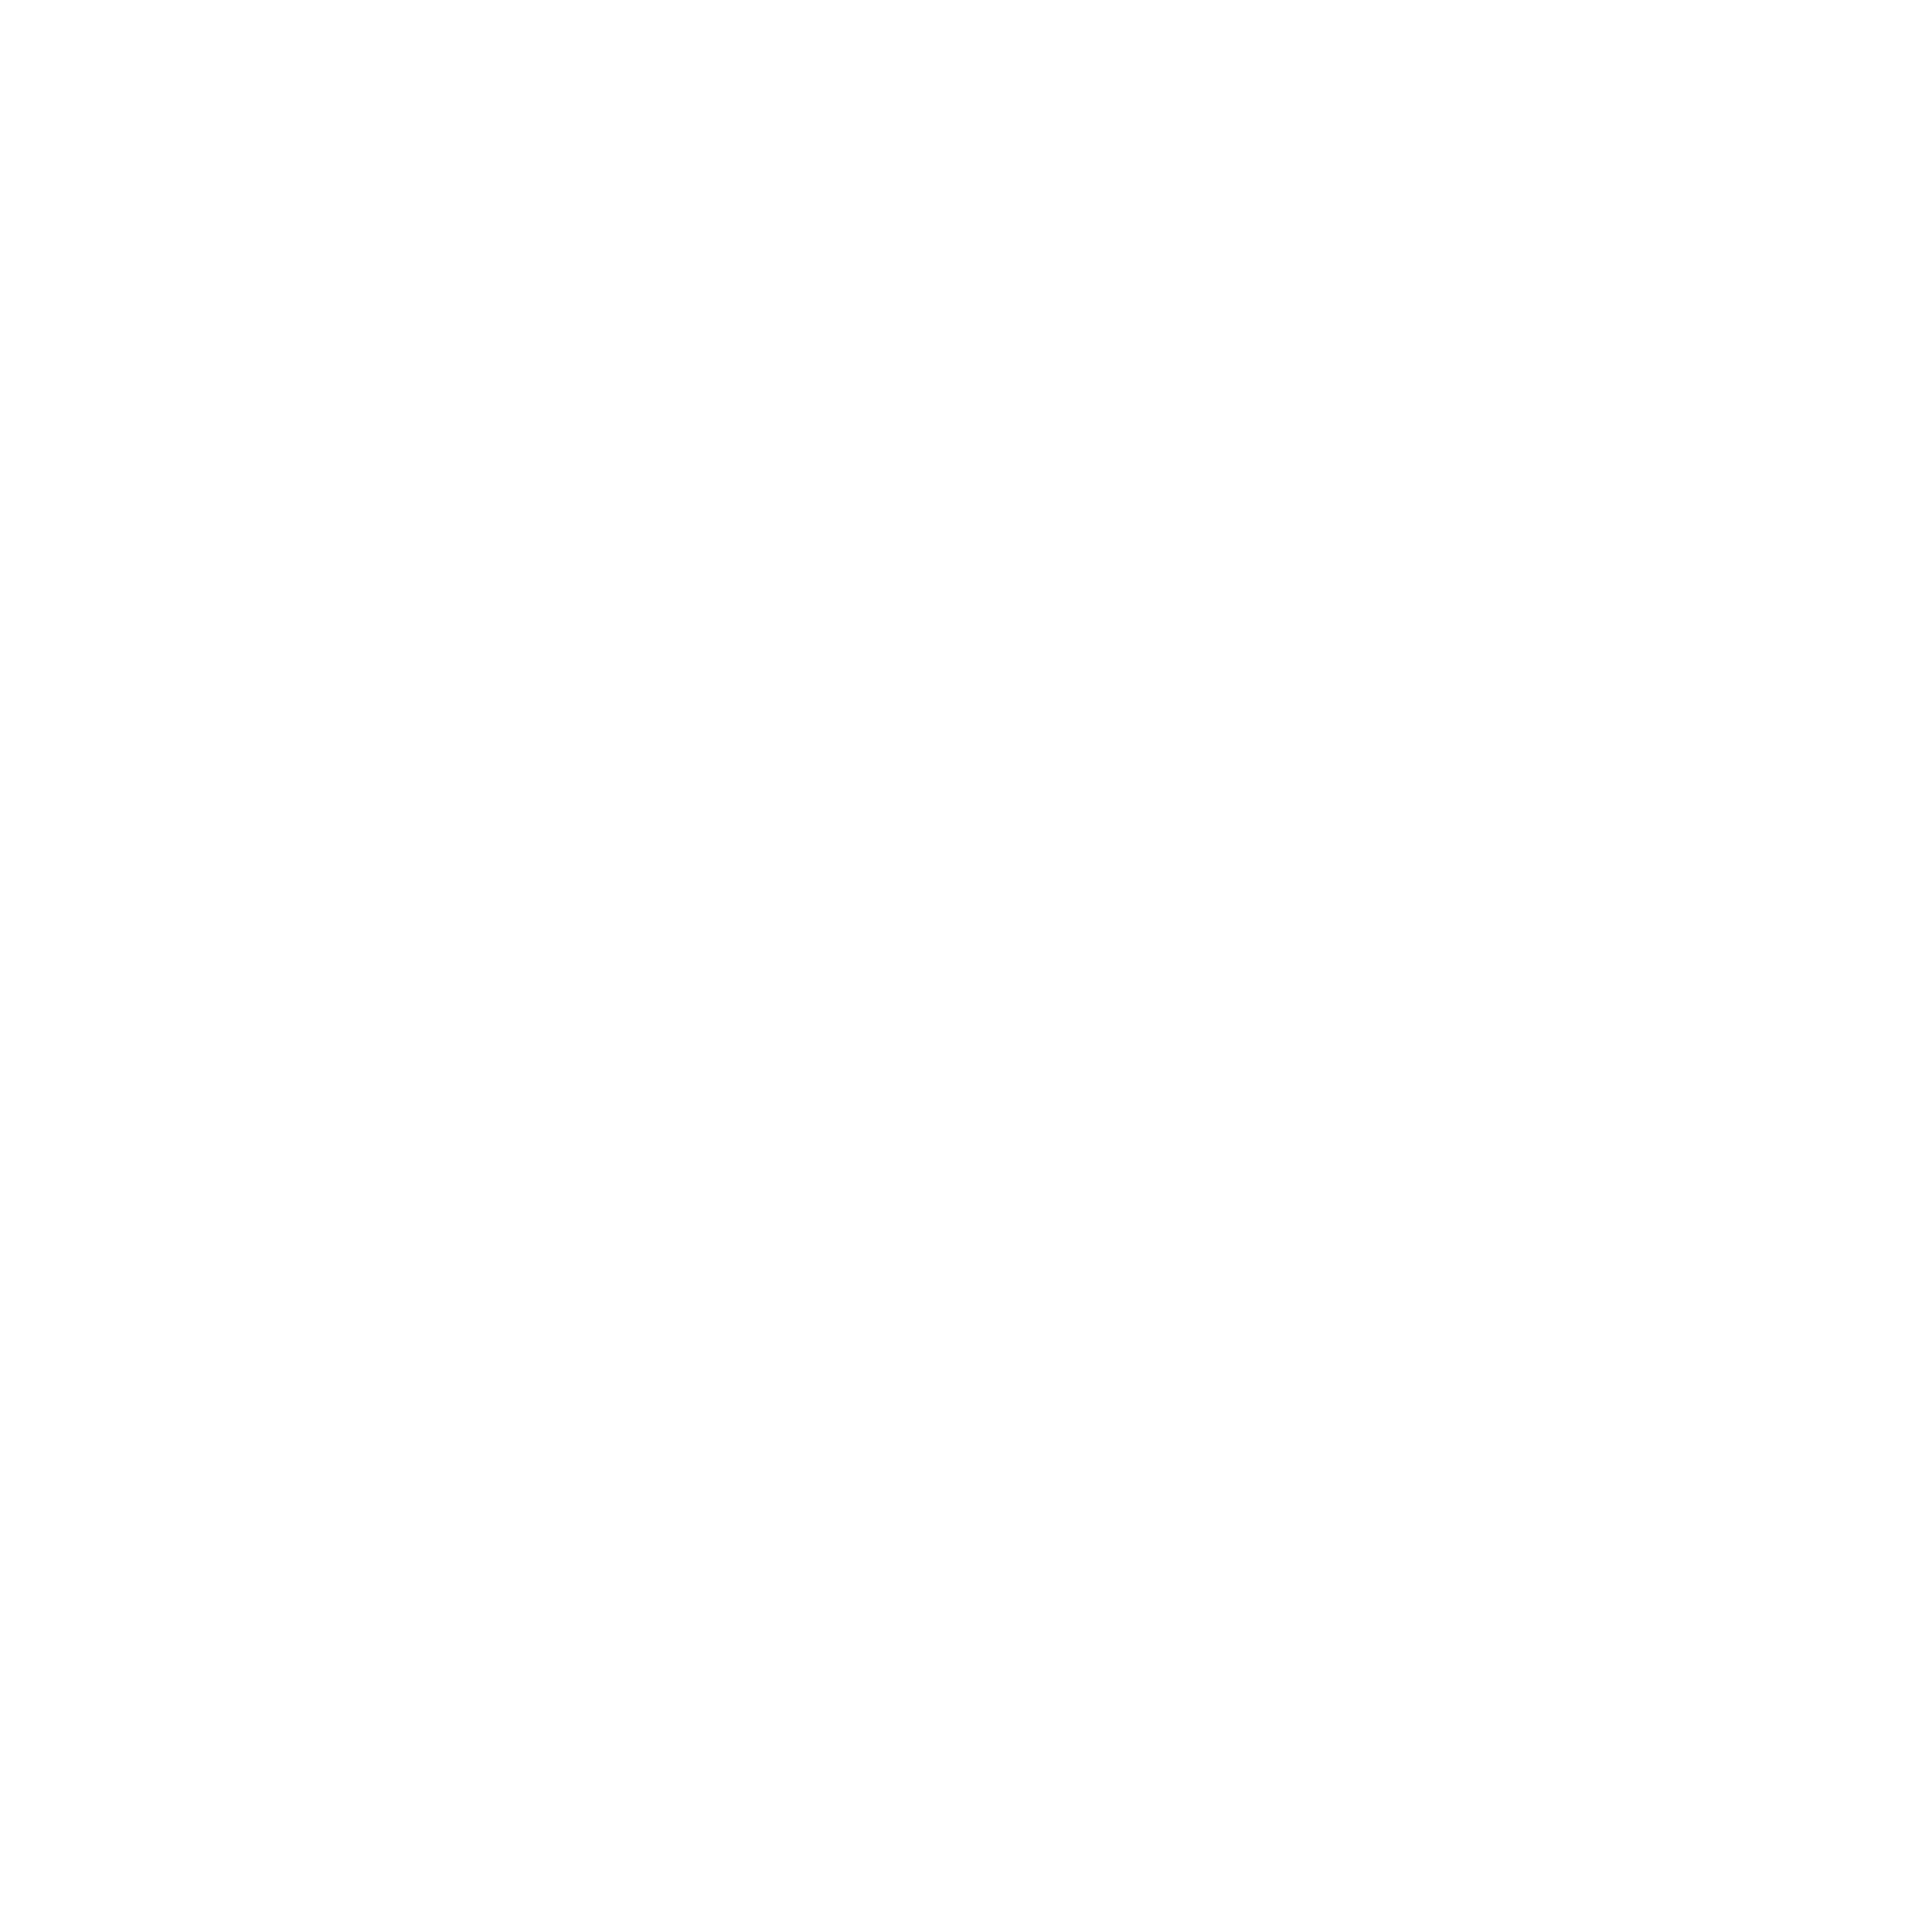 Gate of Time - Zelda Wiki